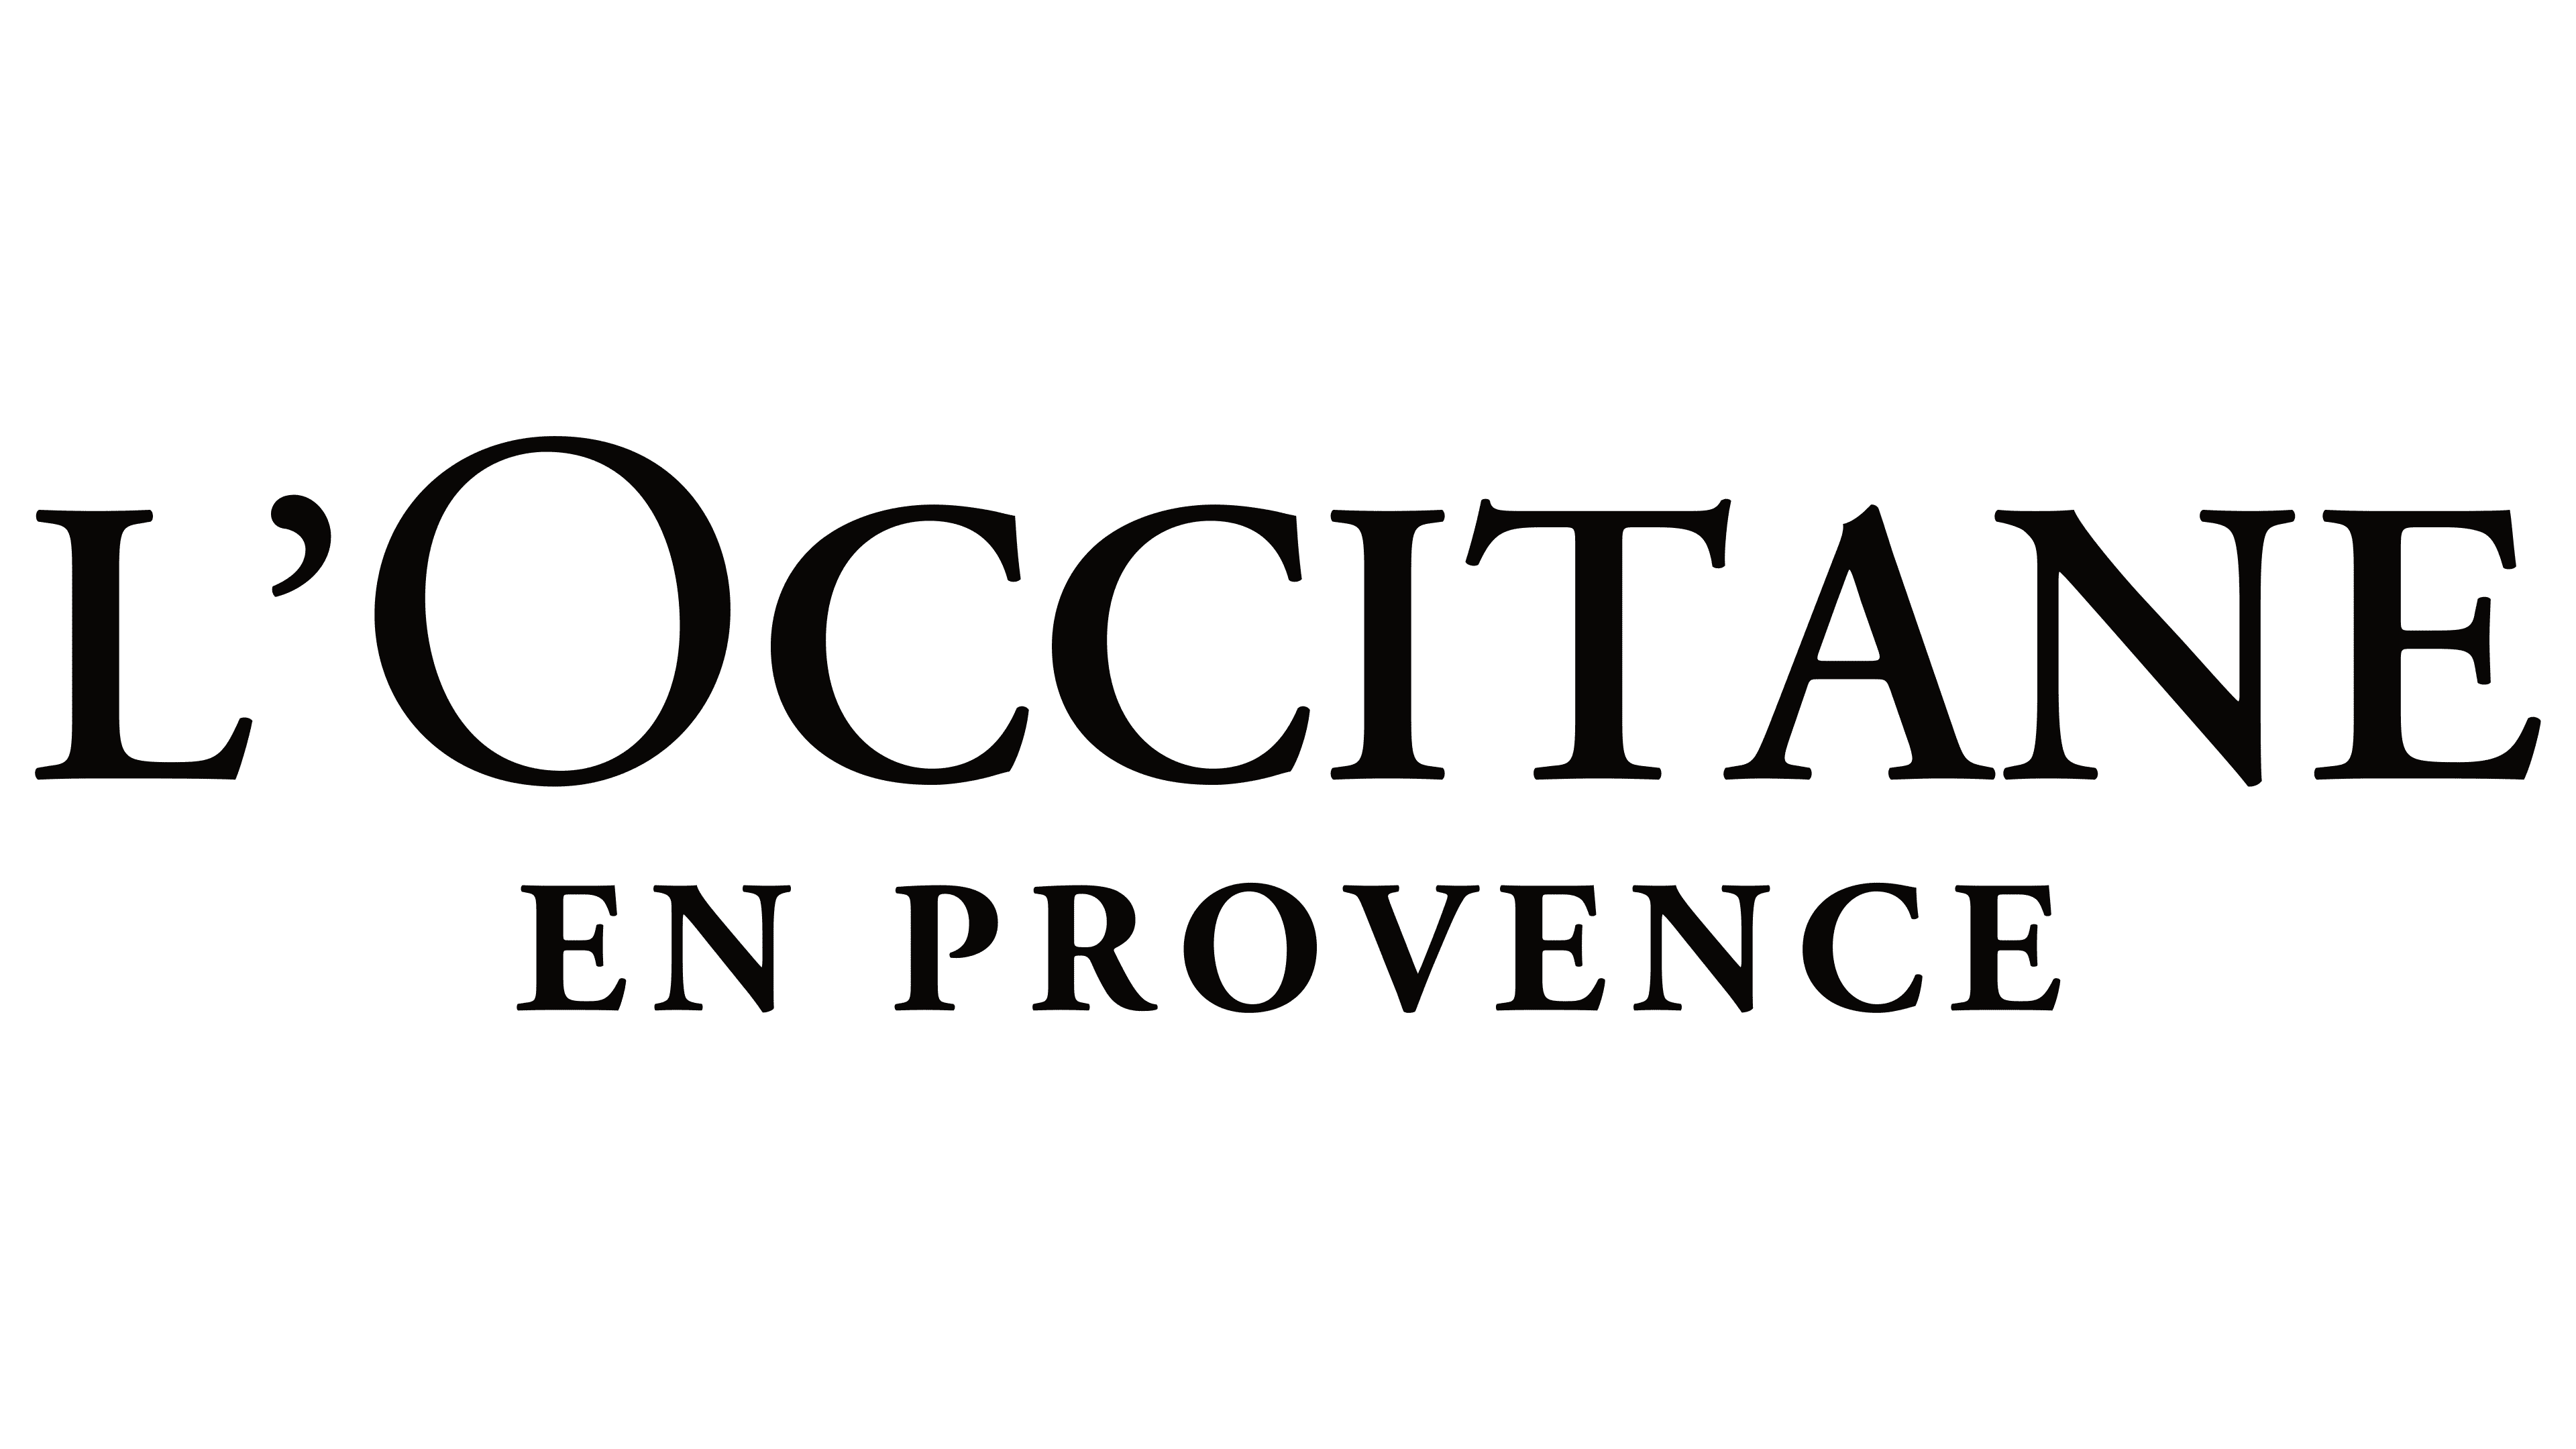 L’Occitane en Provence logo